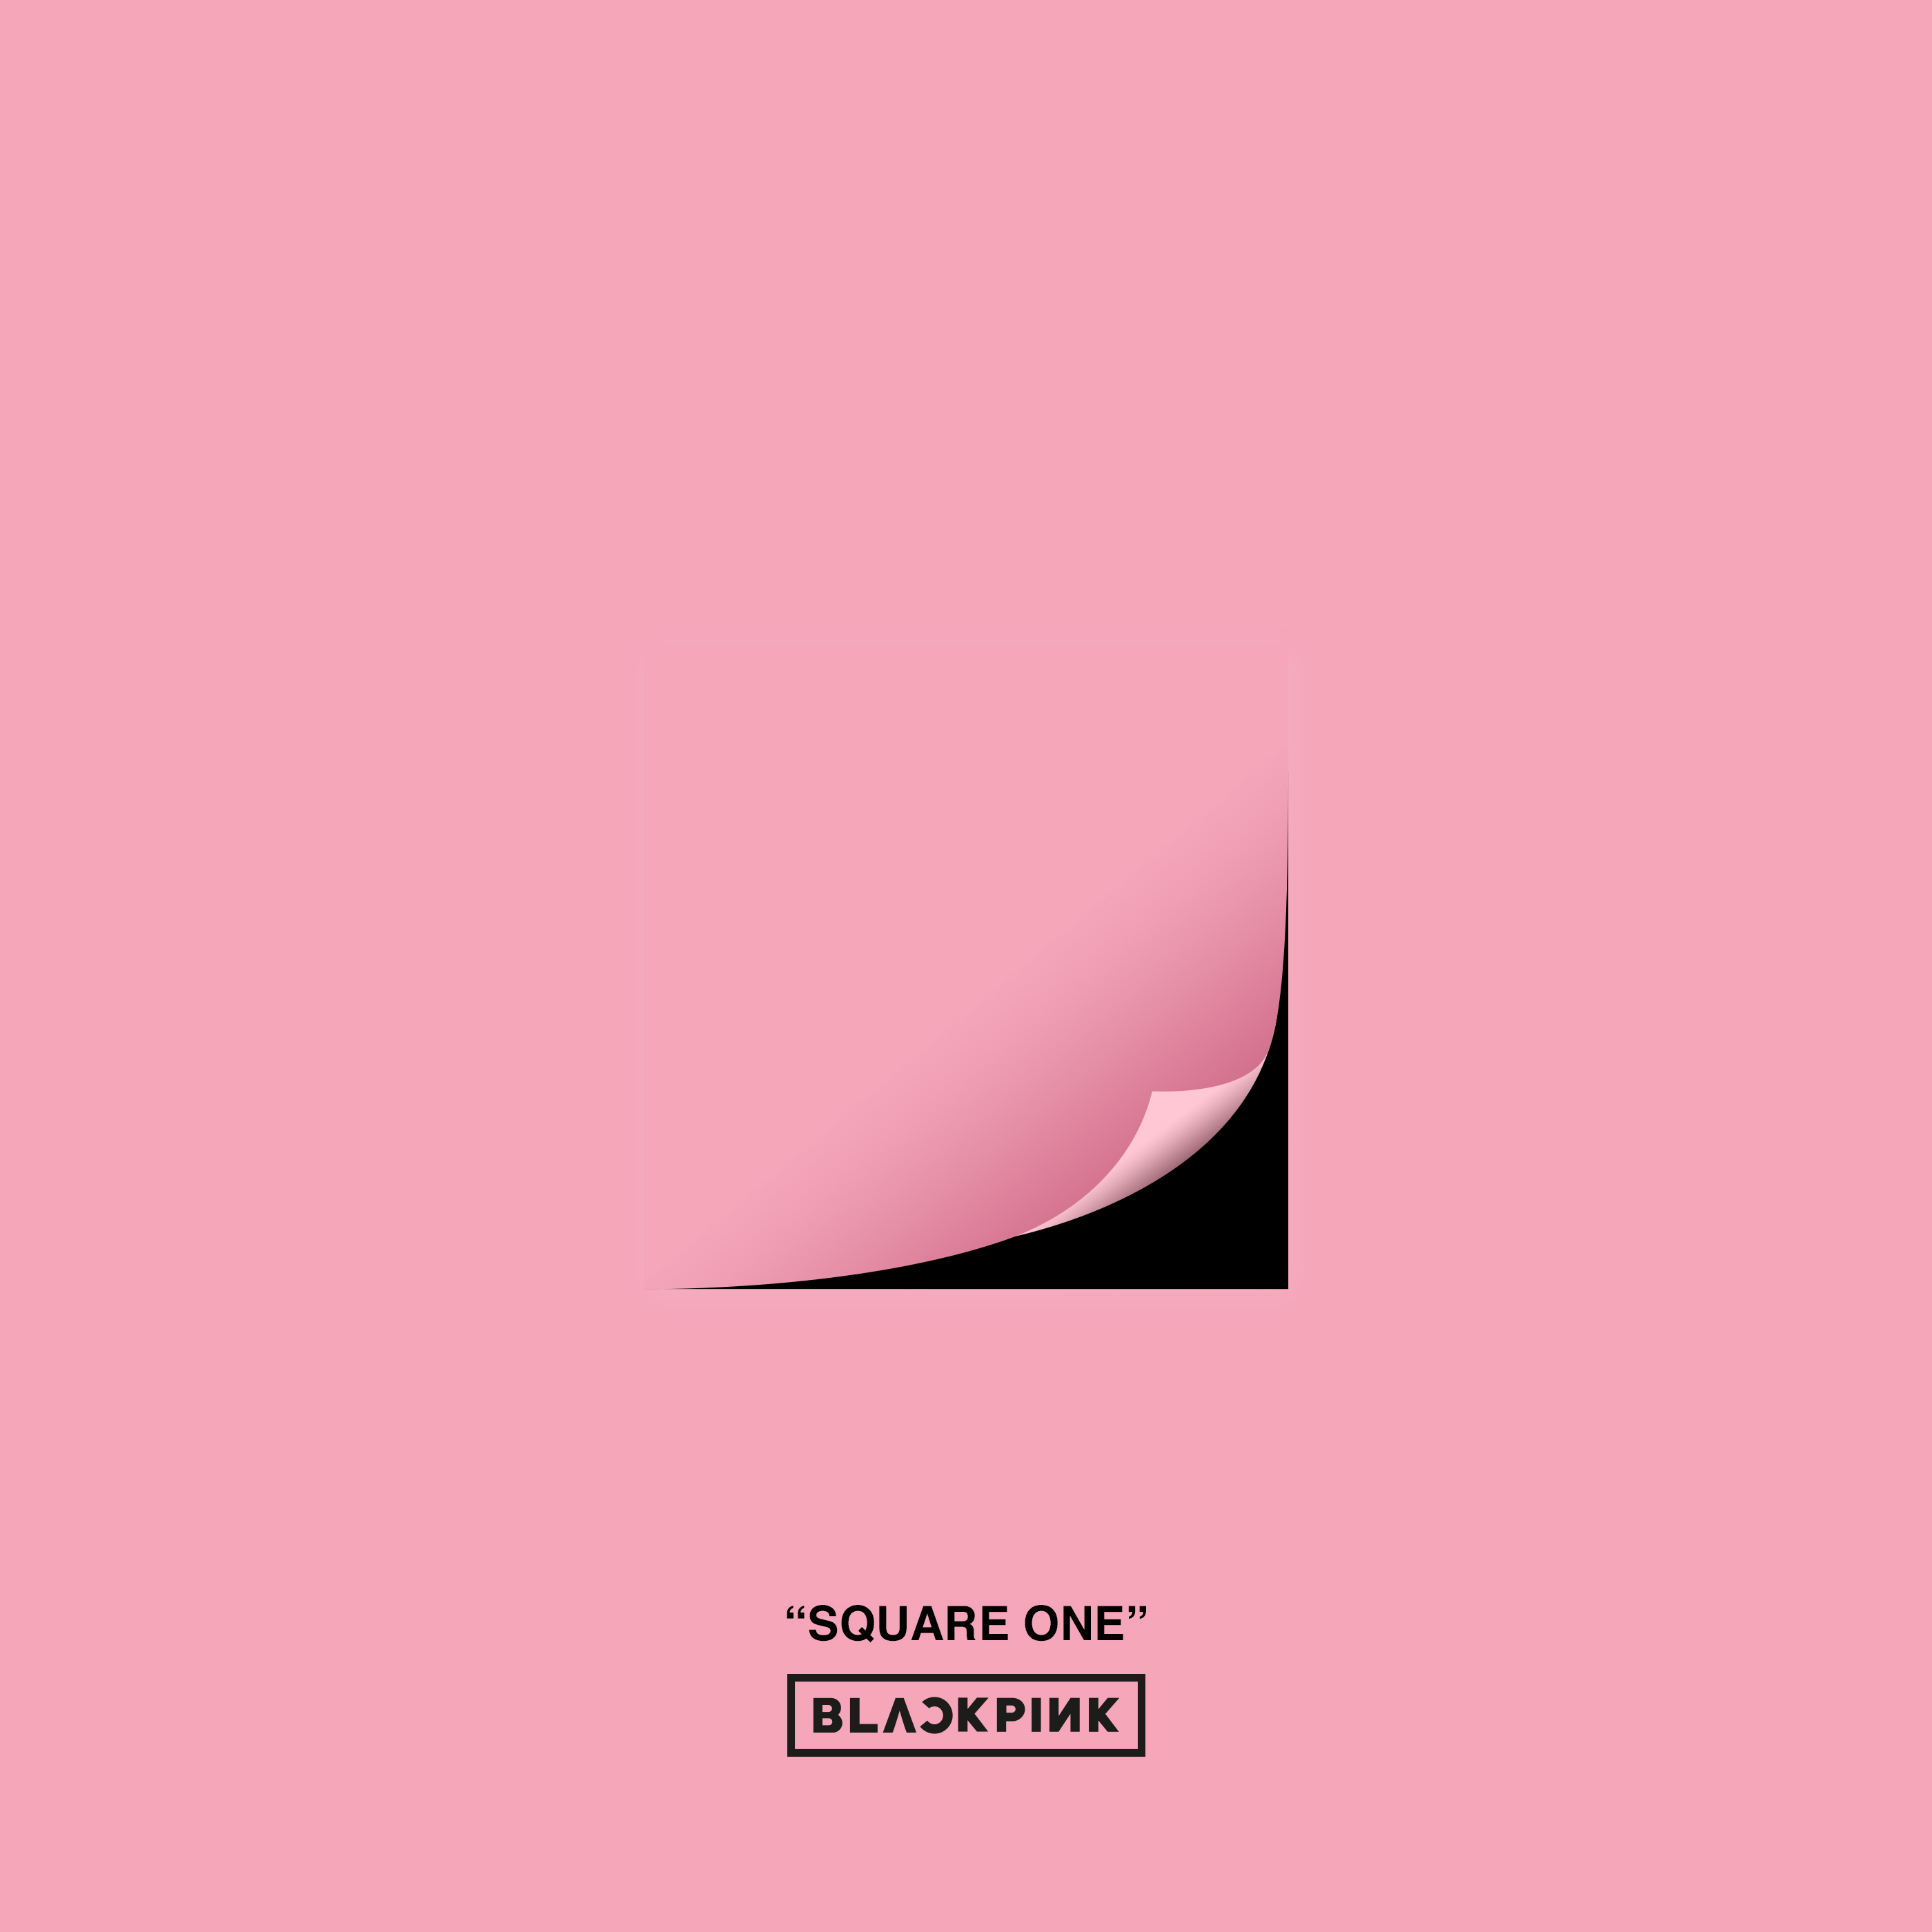 【首发】blackpink《square one》出道单曲2016.08.